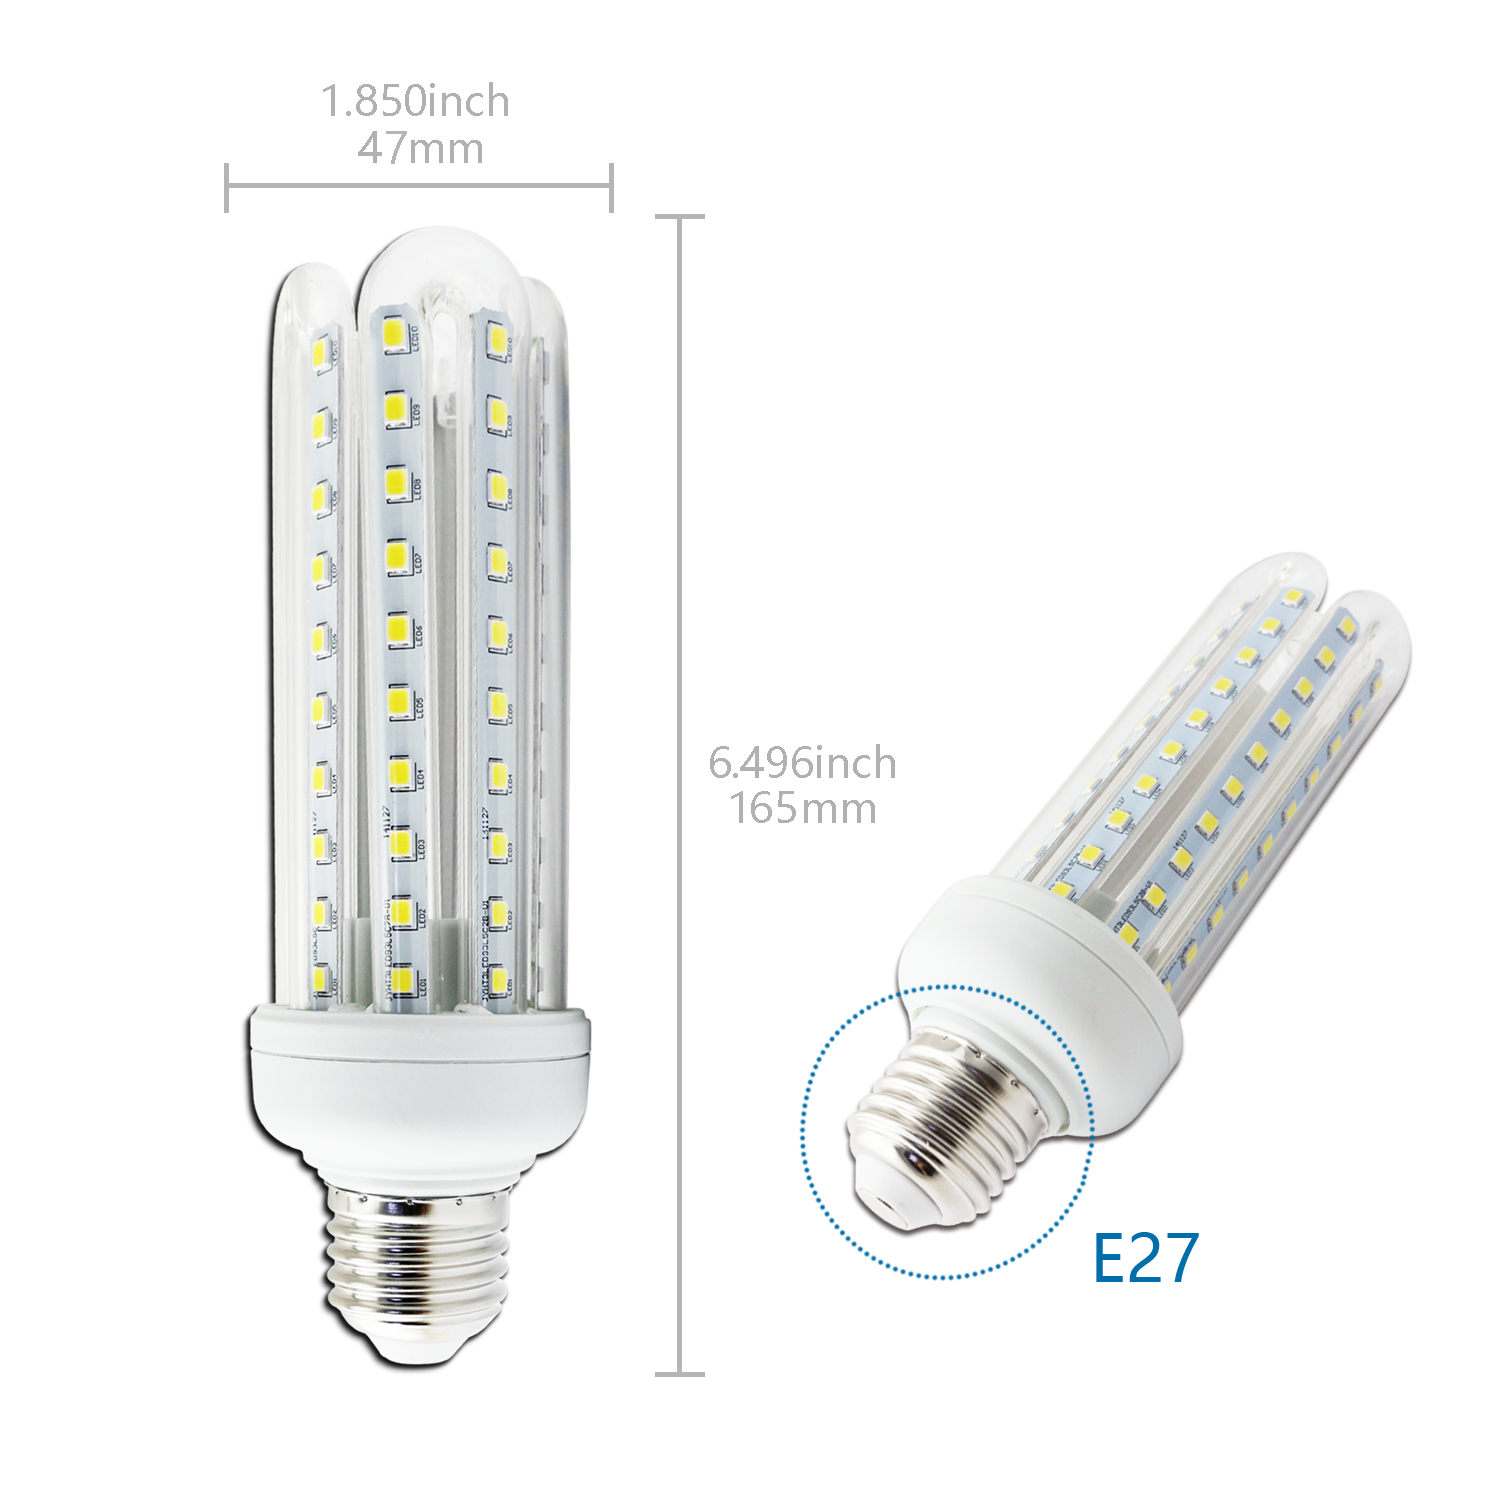 Aigostar - Confezione da 5 Lampadine LED B5 T3 4U, 19W, Attacco Grande E27, 1500 lumen, Luce Calda 3000K [Classe di efficienza energetica A+]